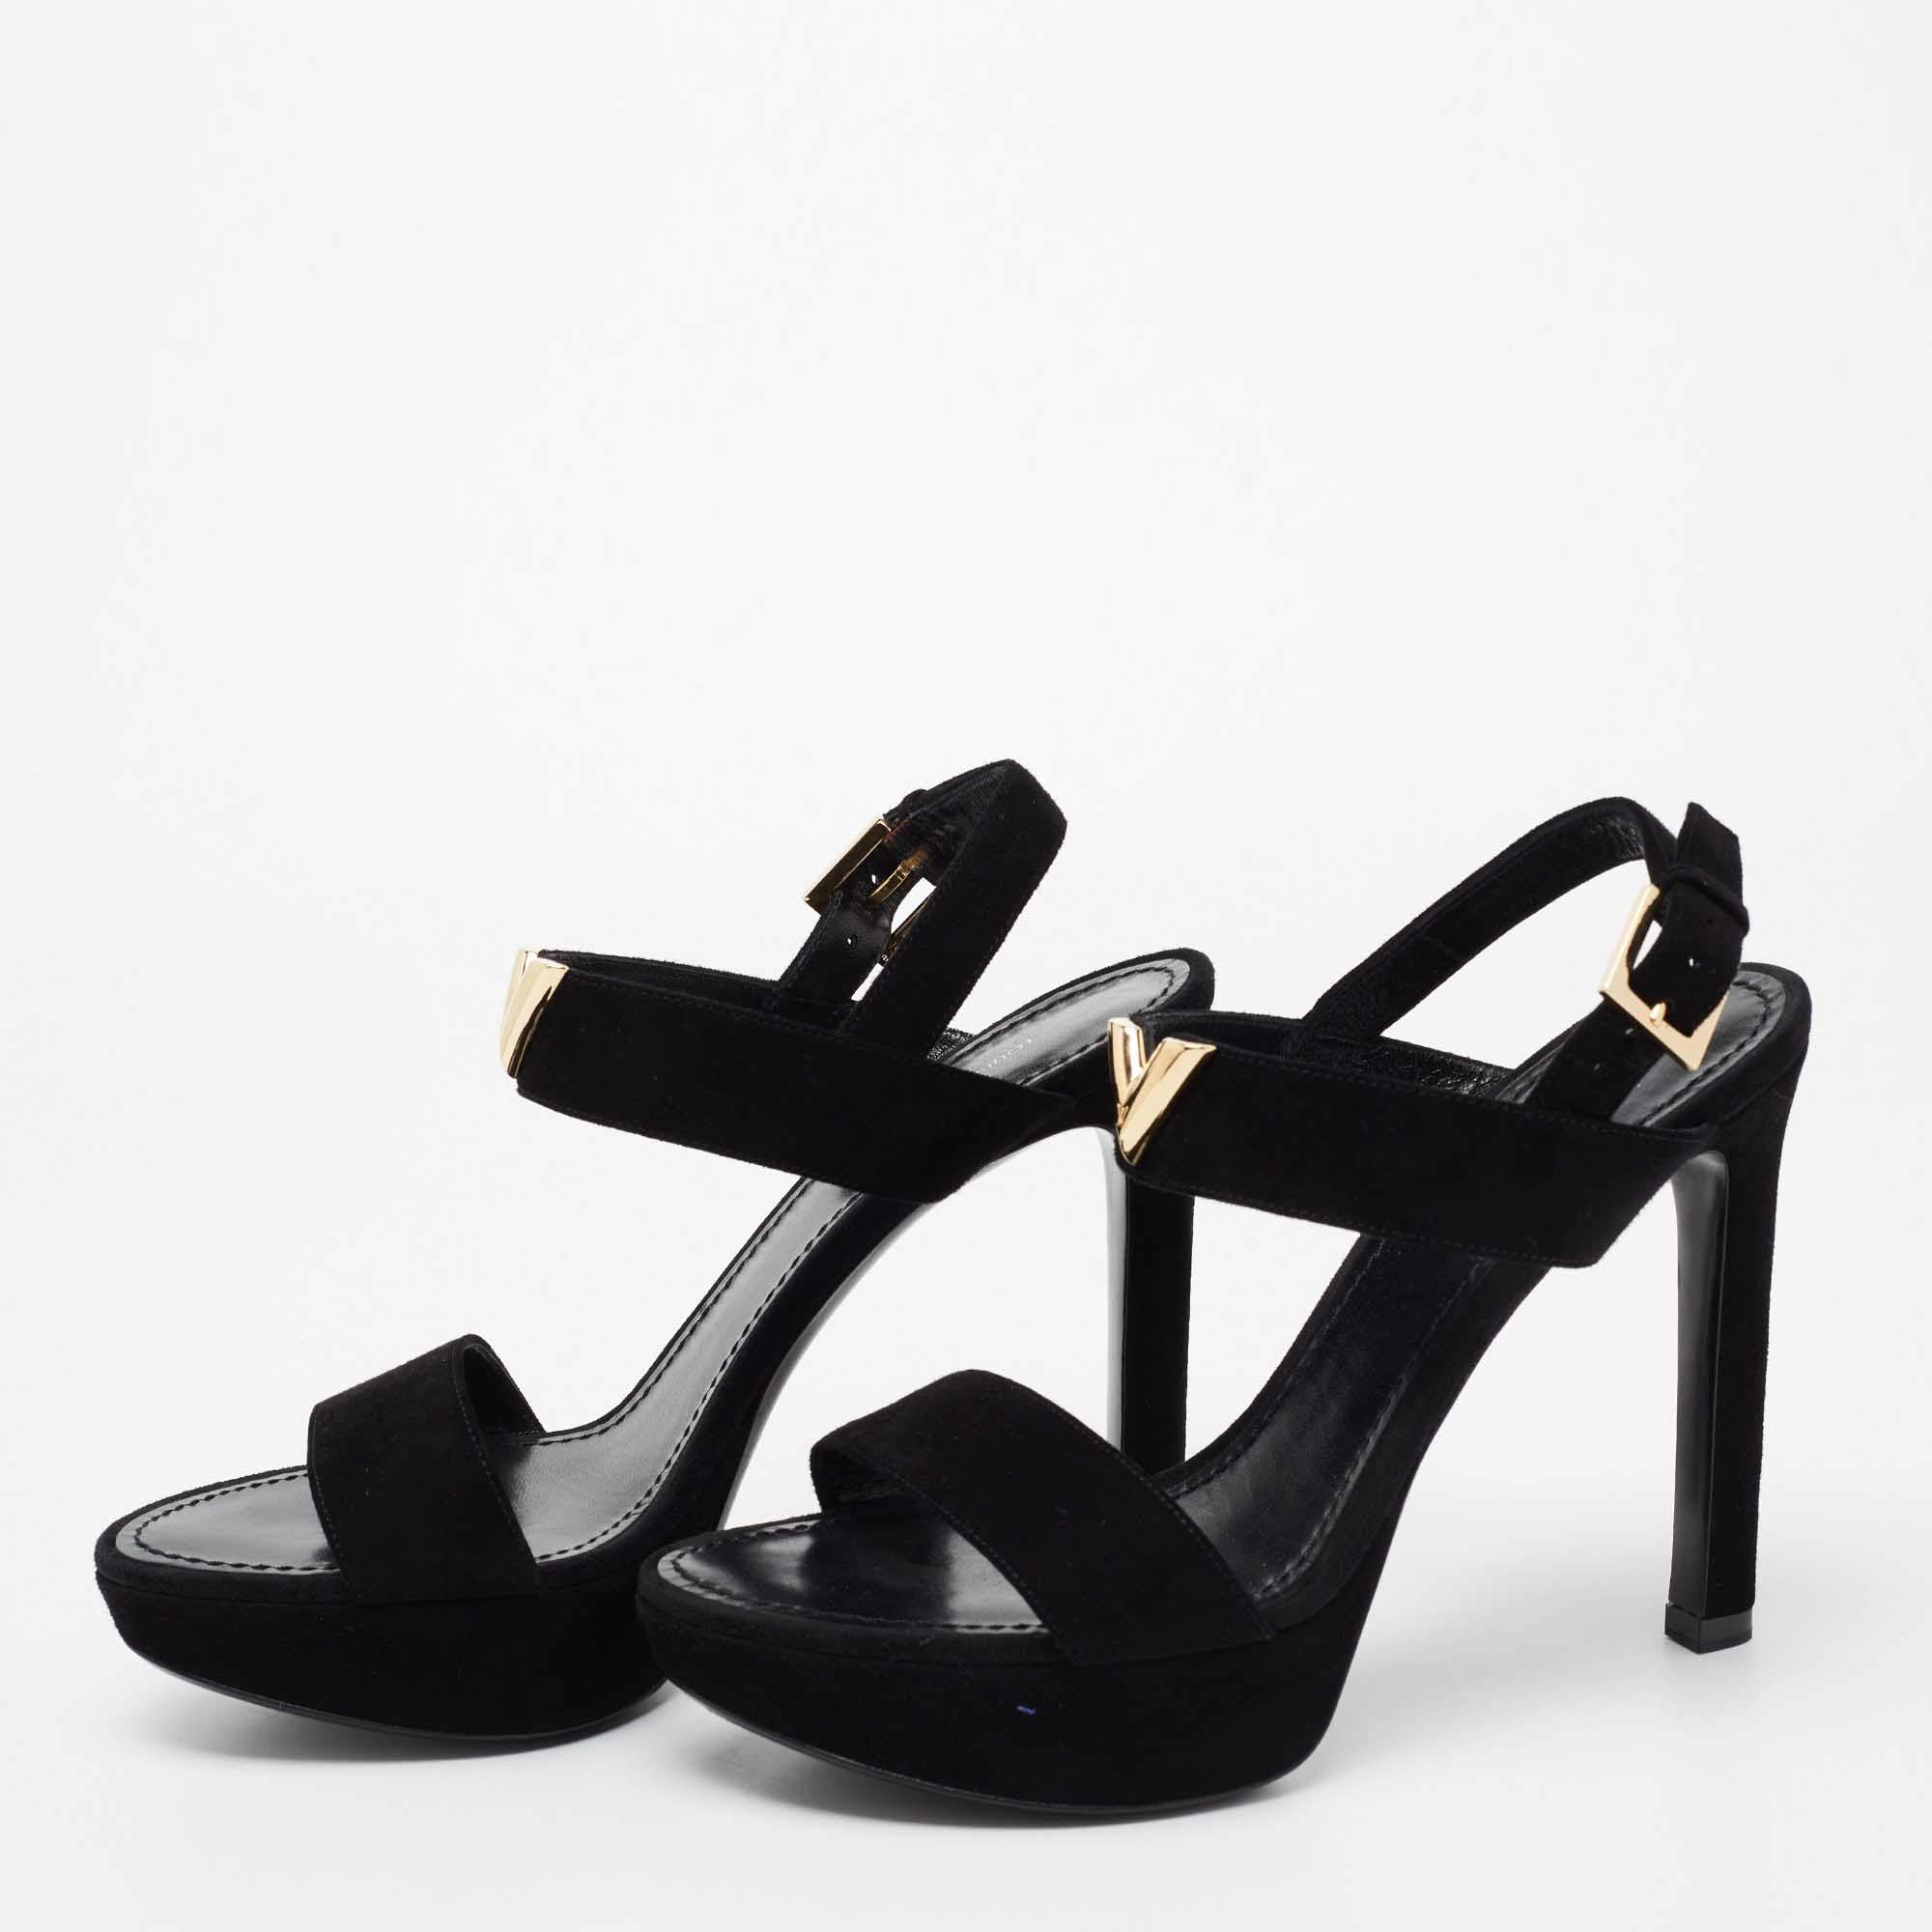 Louis Vuitton women's ankle strap open toe leather sandals size 37